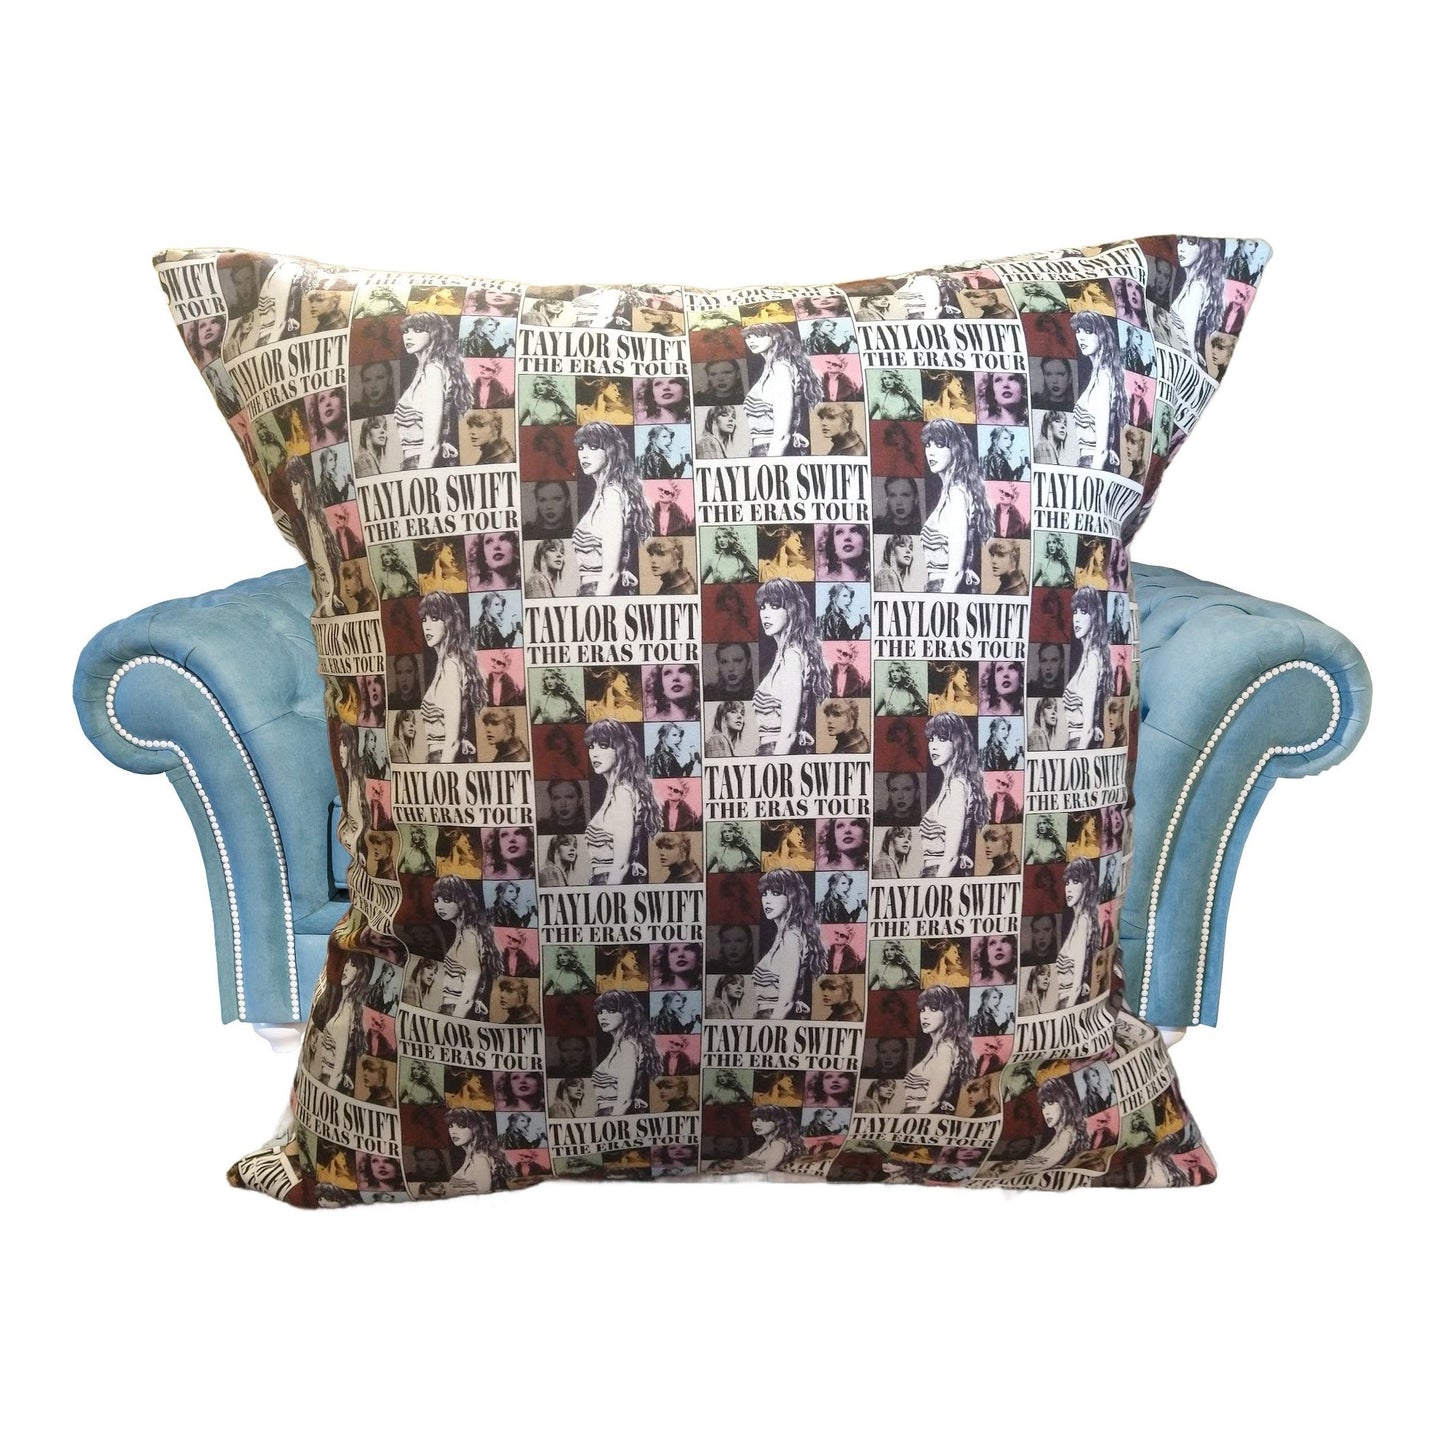 Swiftie Decorative Throw Pillows (Set of 2)